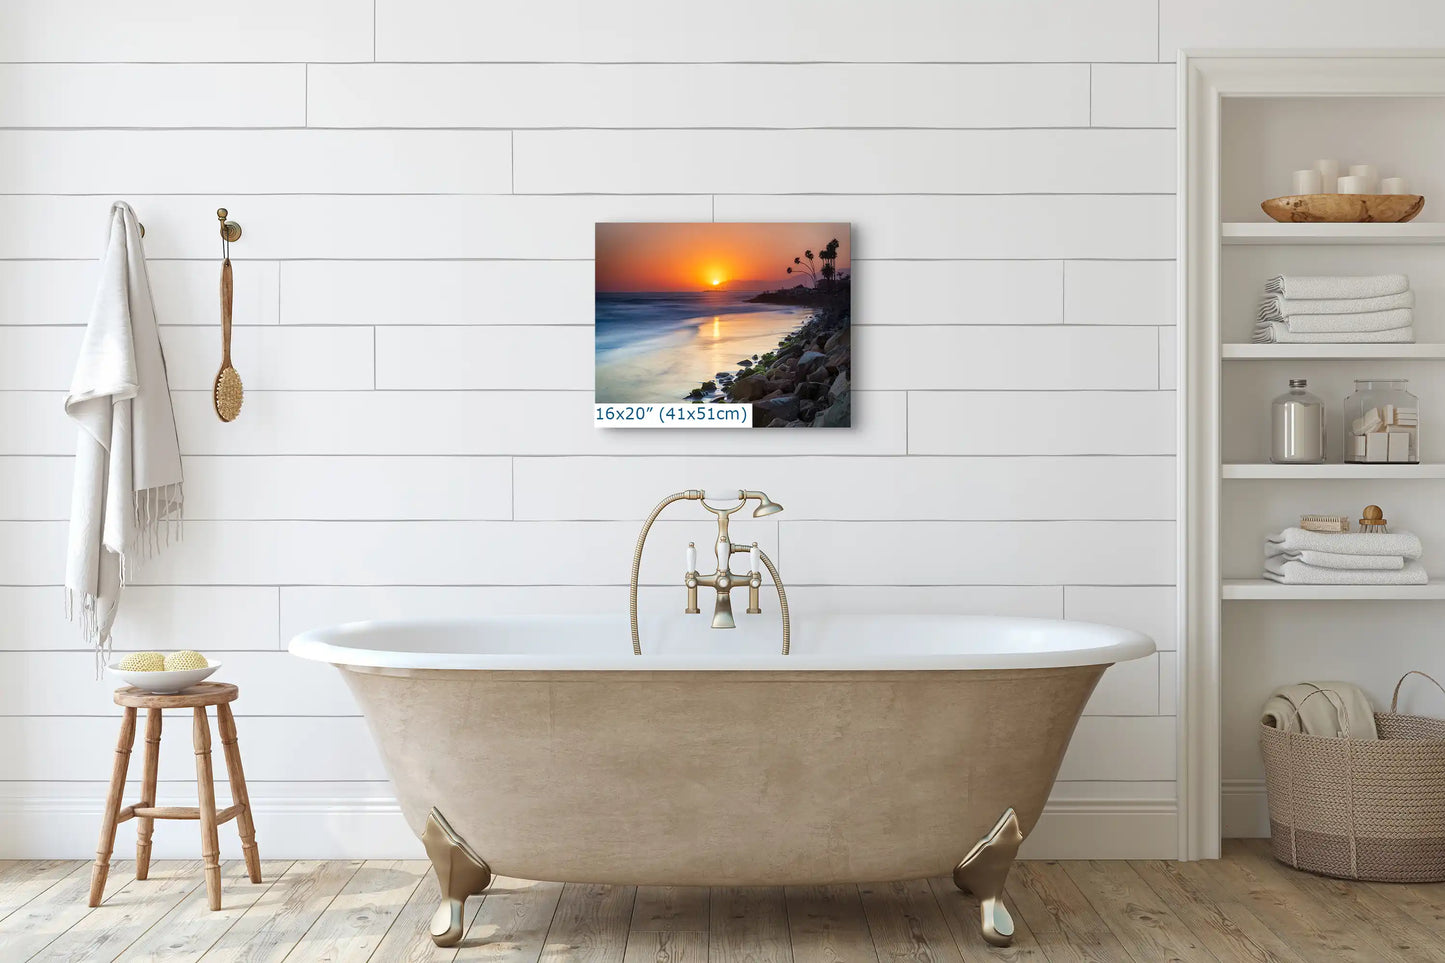 Ventura Beach sunset art above a bathtub, creating a serene bathroom ambiance with a 16"x20" canvas.